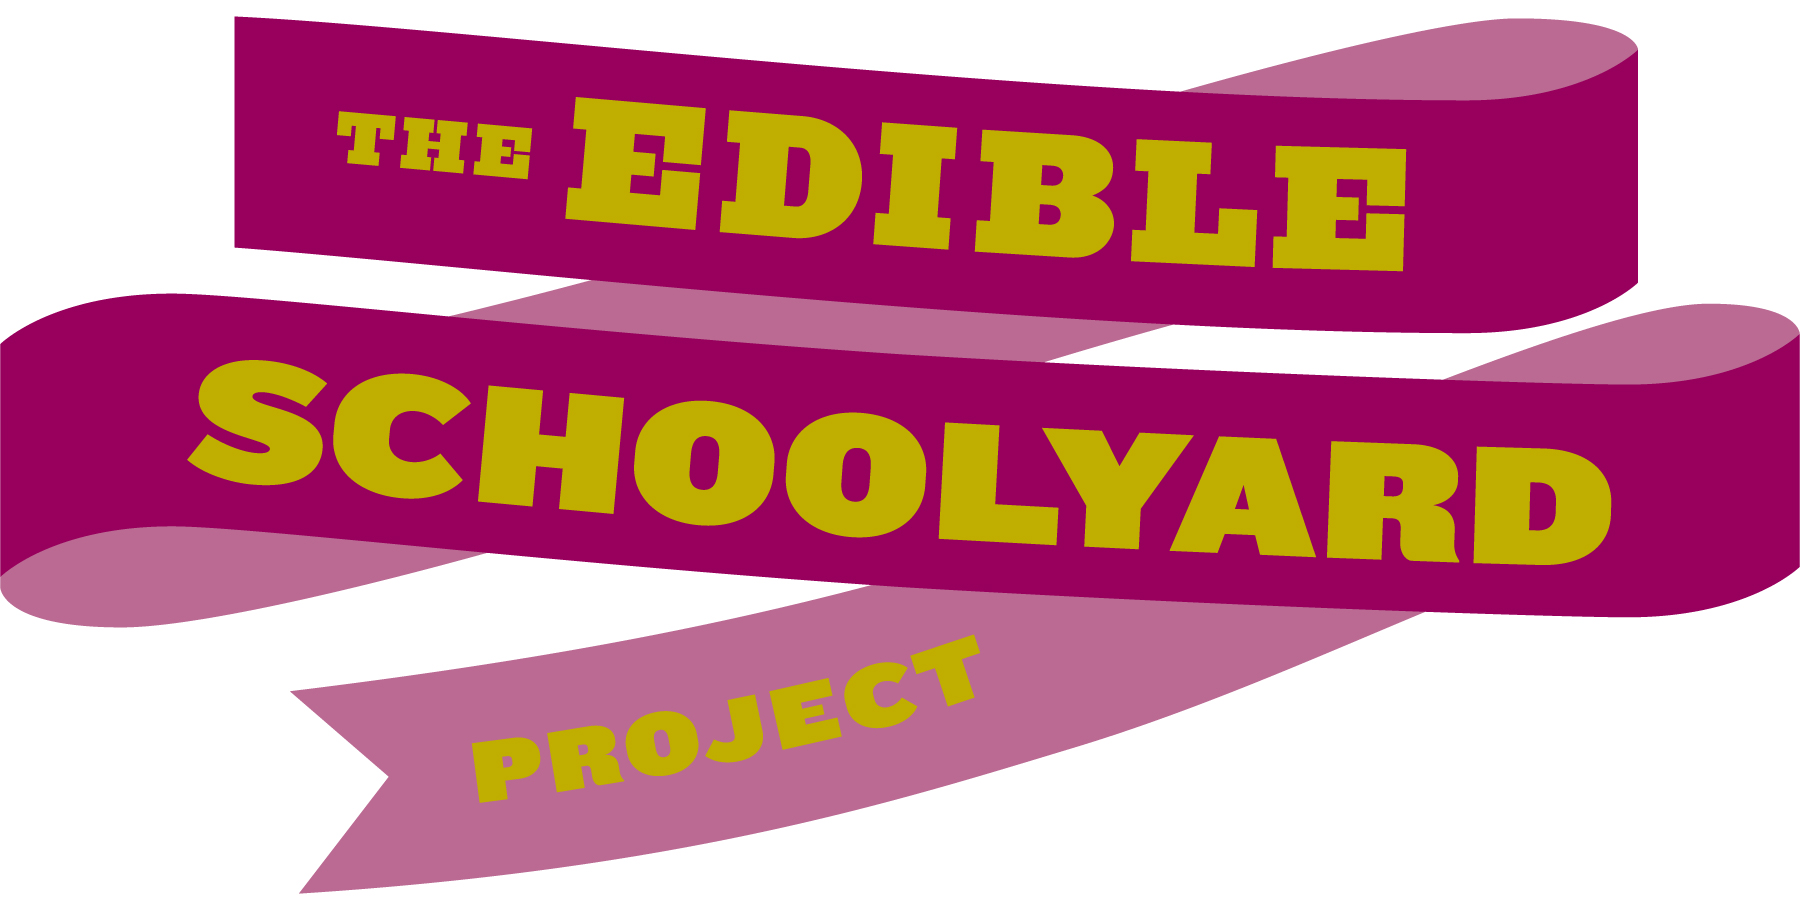 Edible Schoolyard Project 